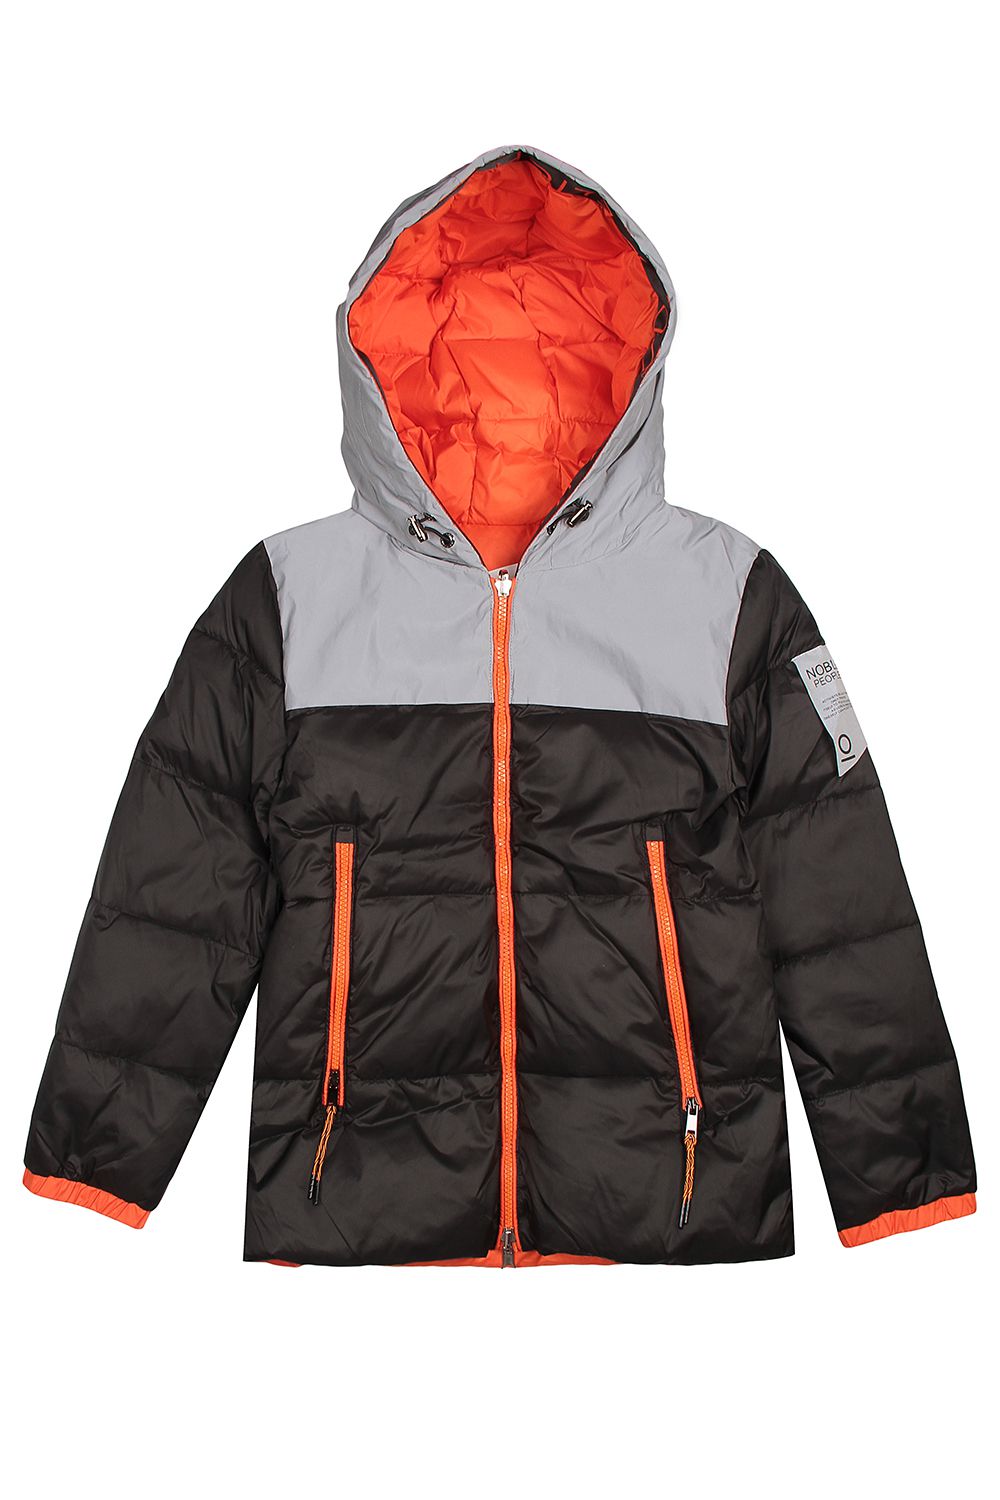 Куртка Noble People, размер 140, цвет оранжевый - фото 5